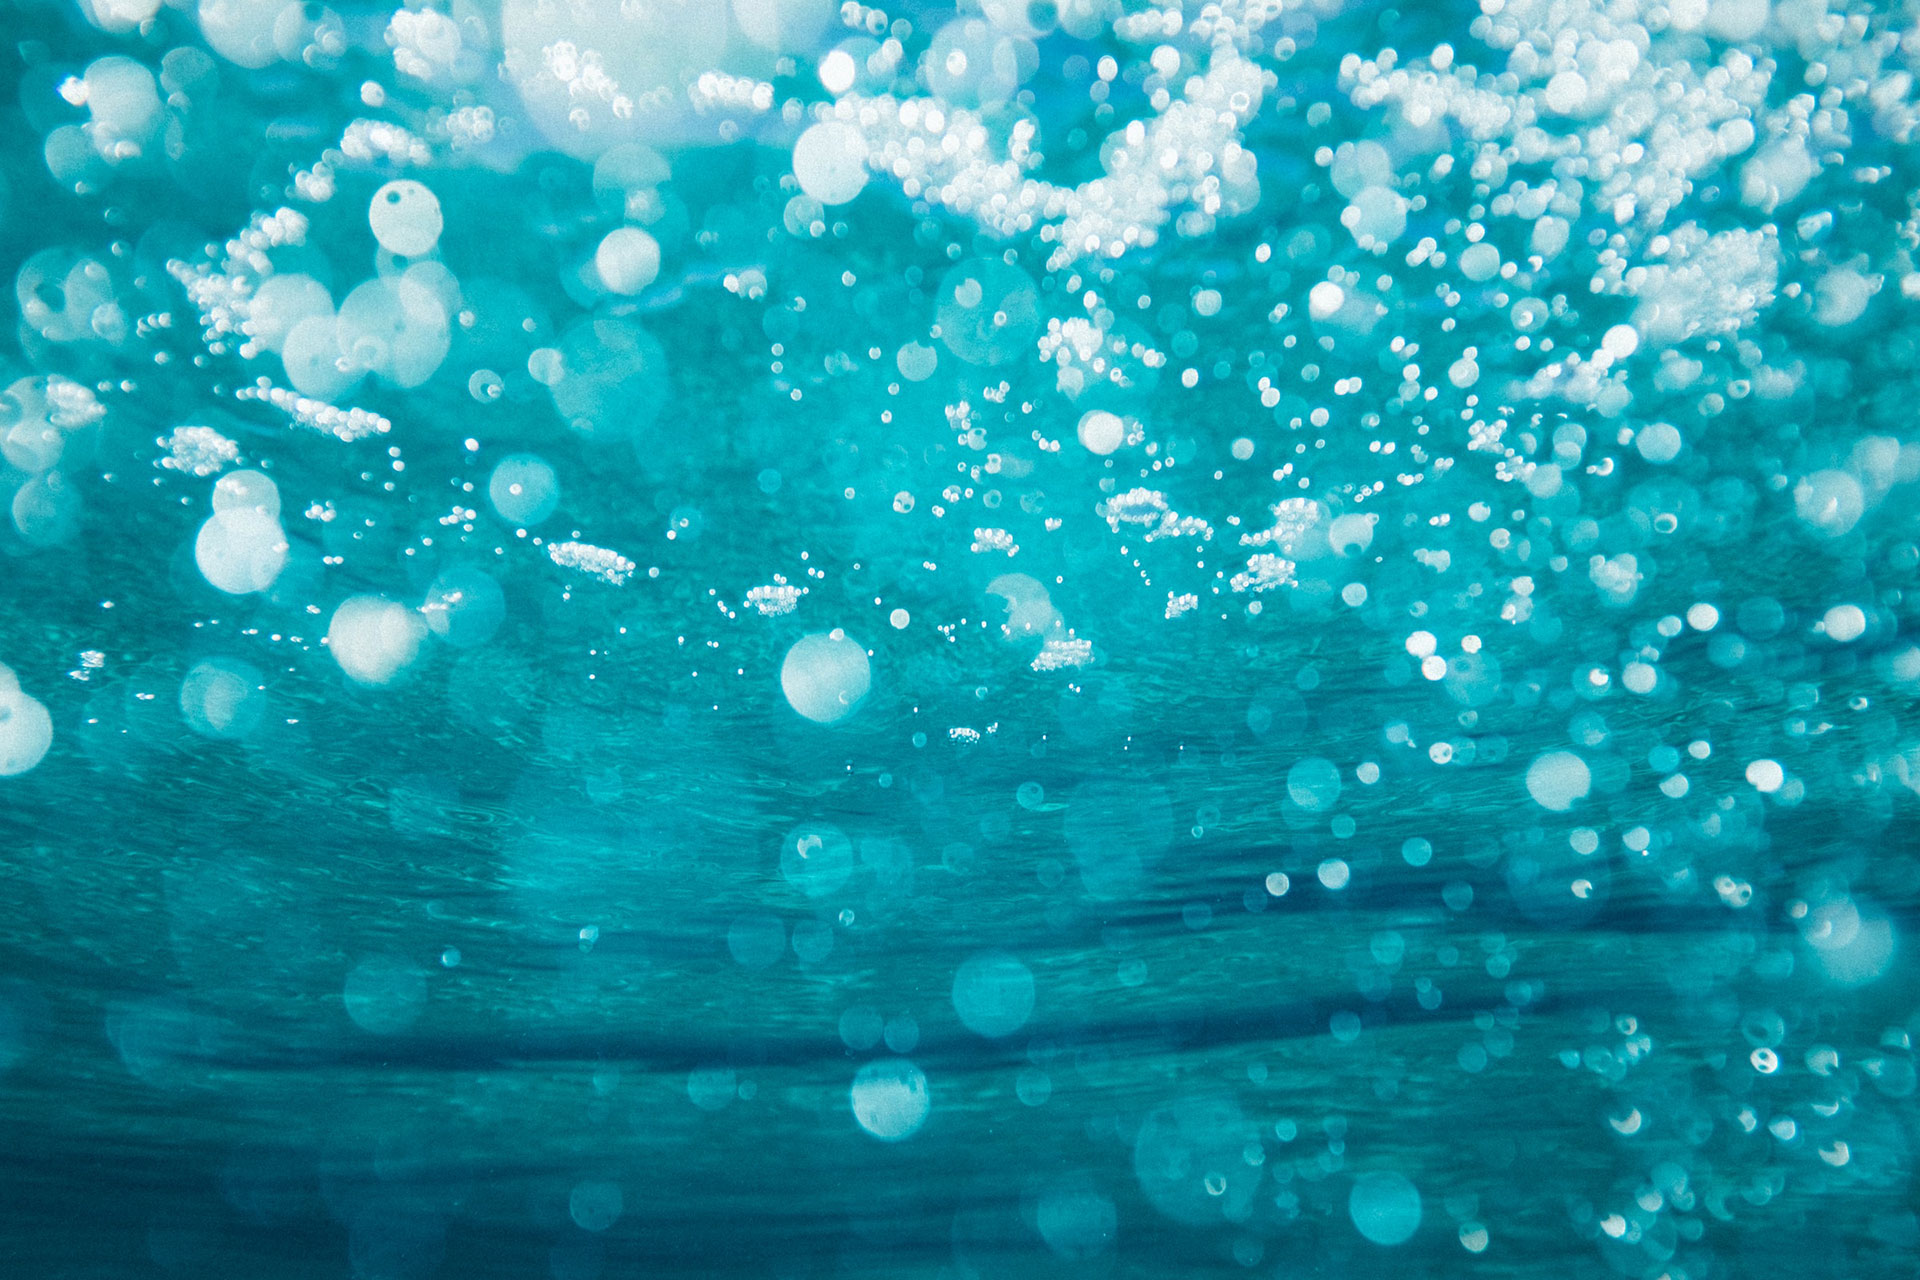 Underwater shot showing bubbles